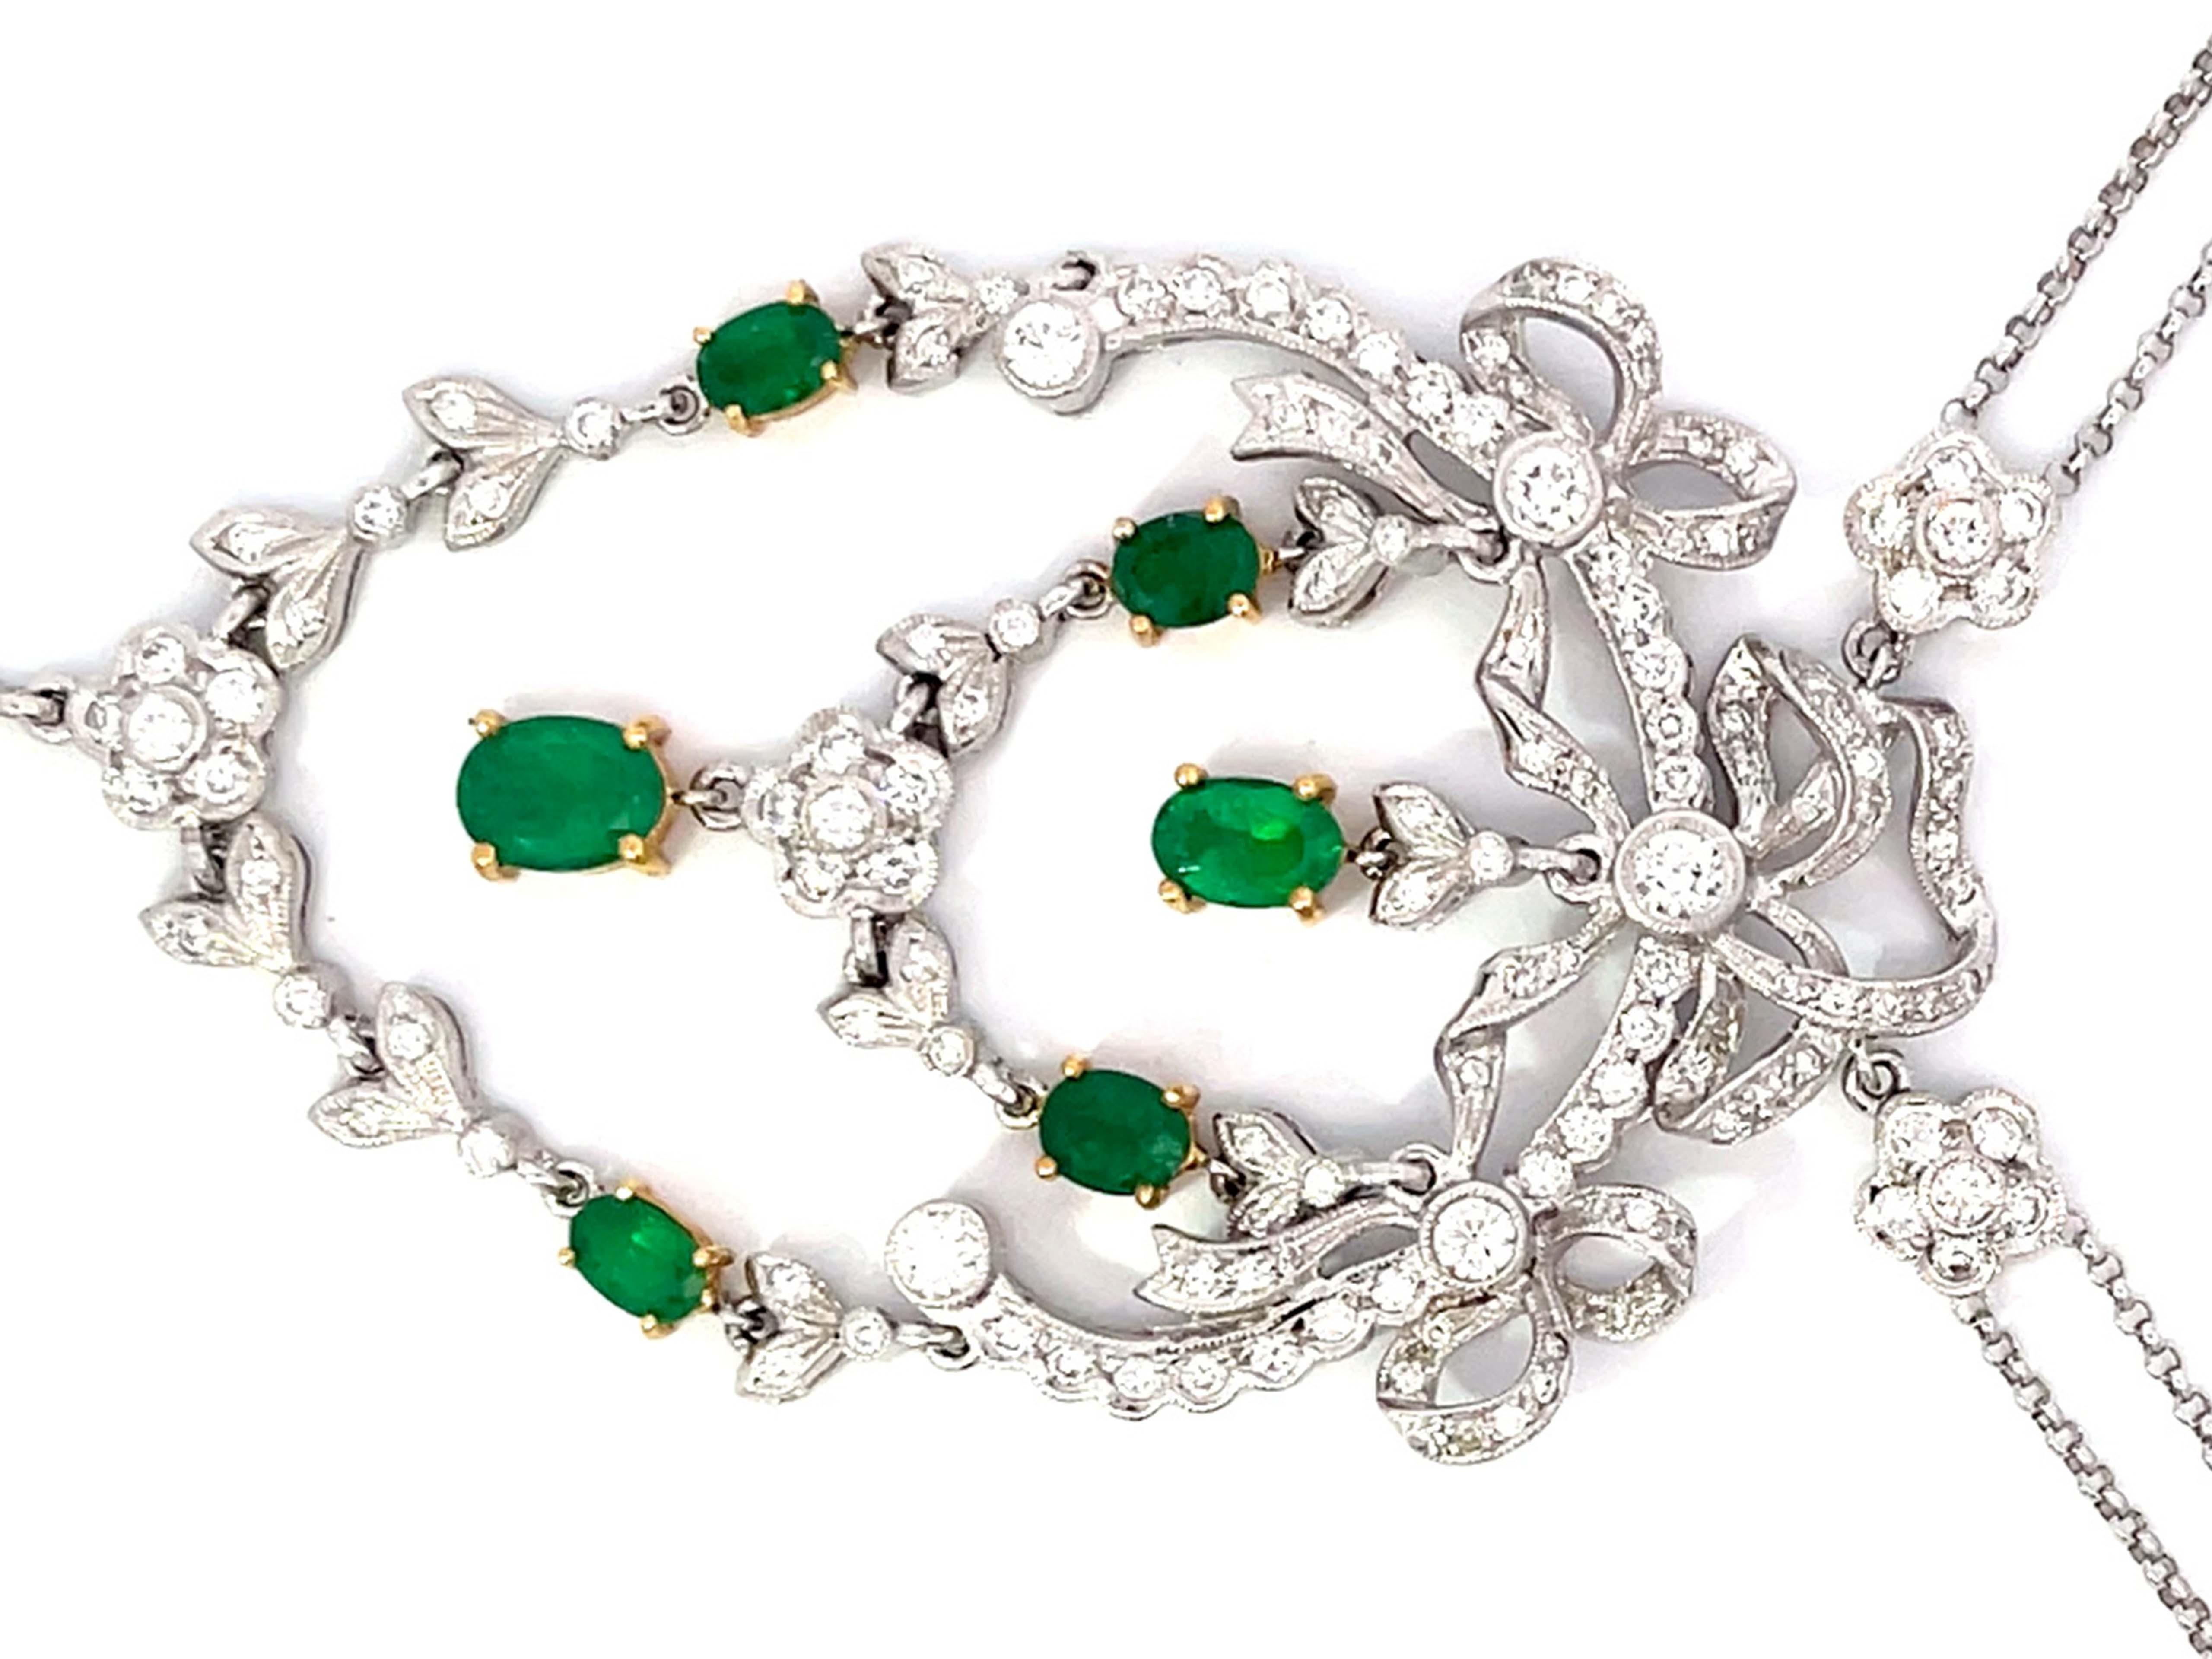 Brilliant Cut Victorian Diamond and Emerald Dangly Pendant Necklace in 18k White Gold For Sale